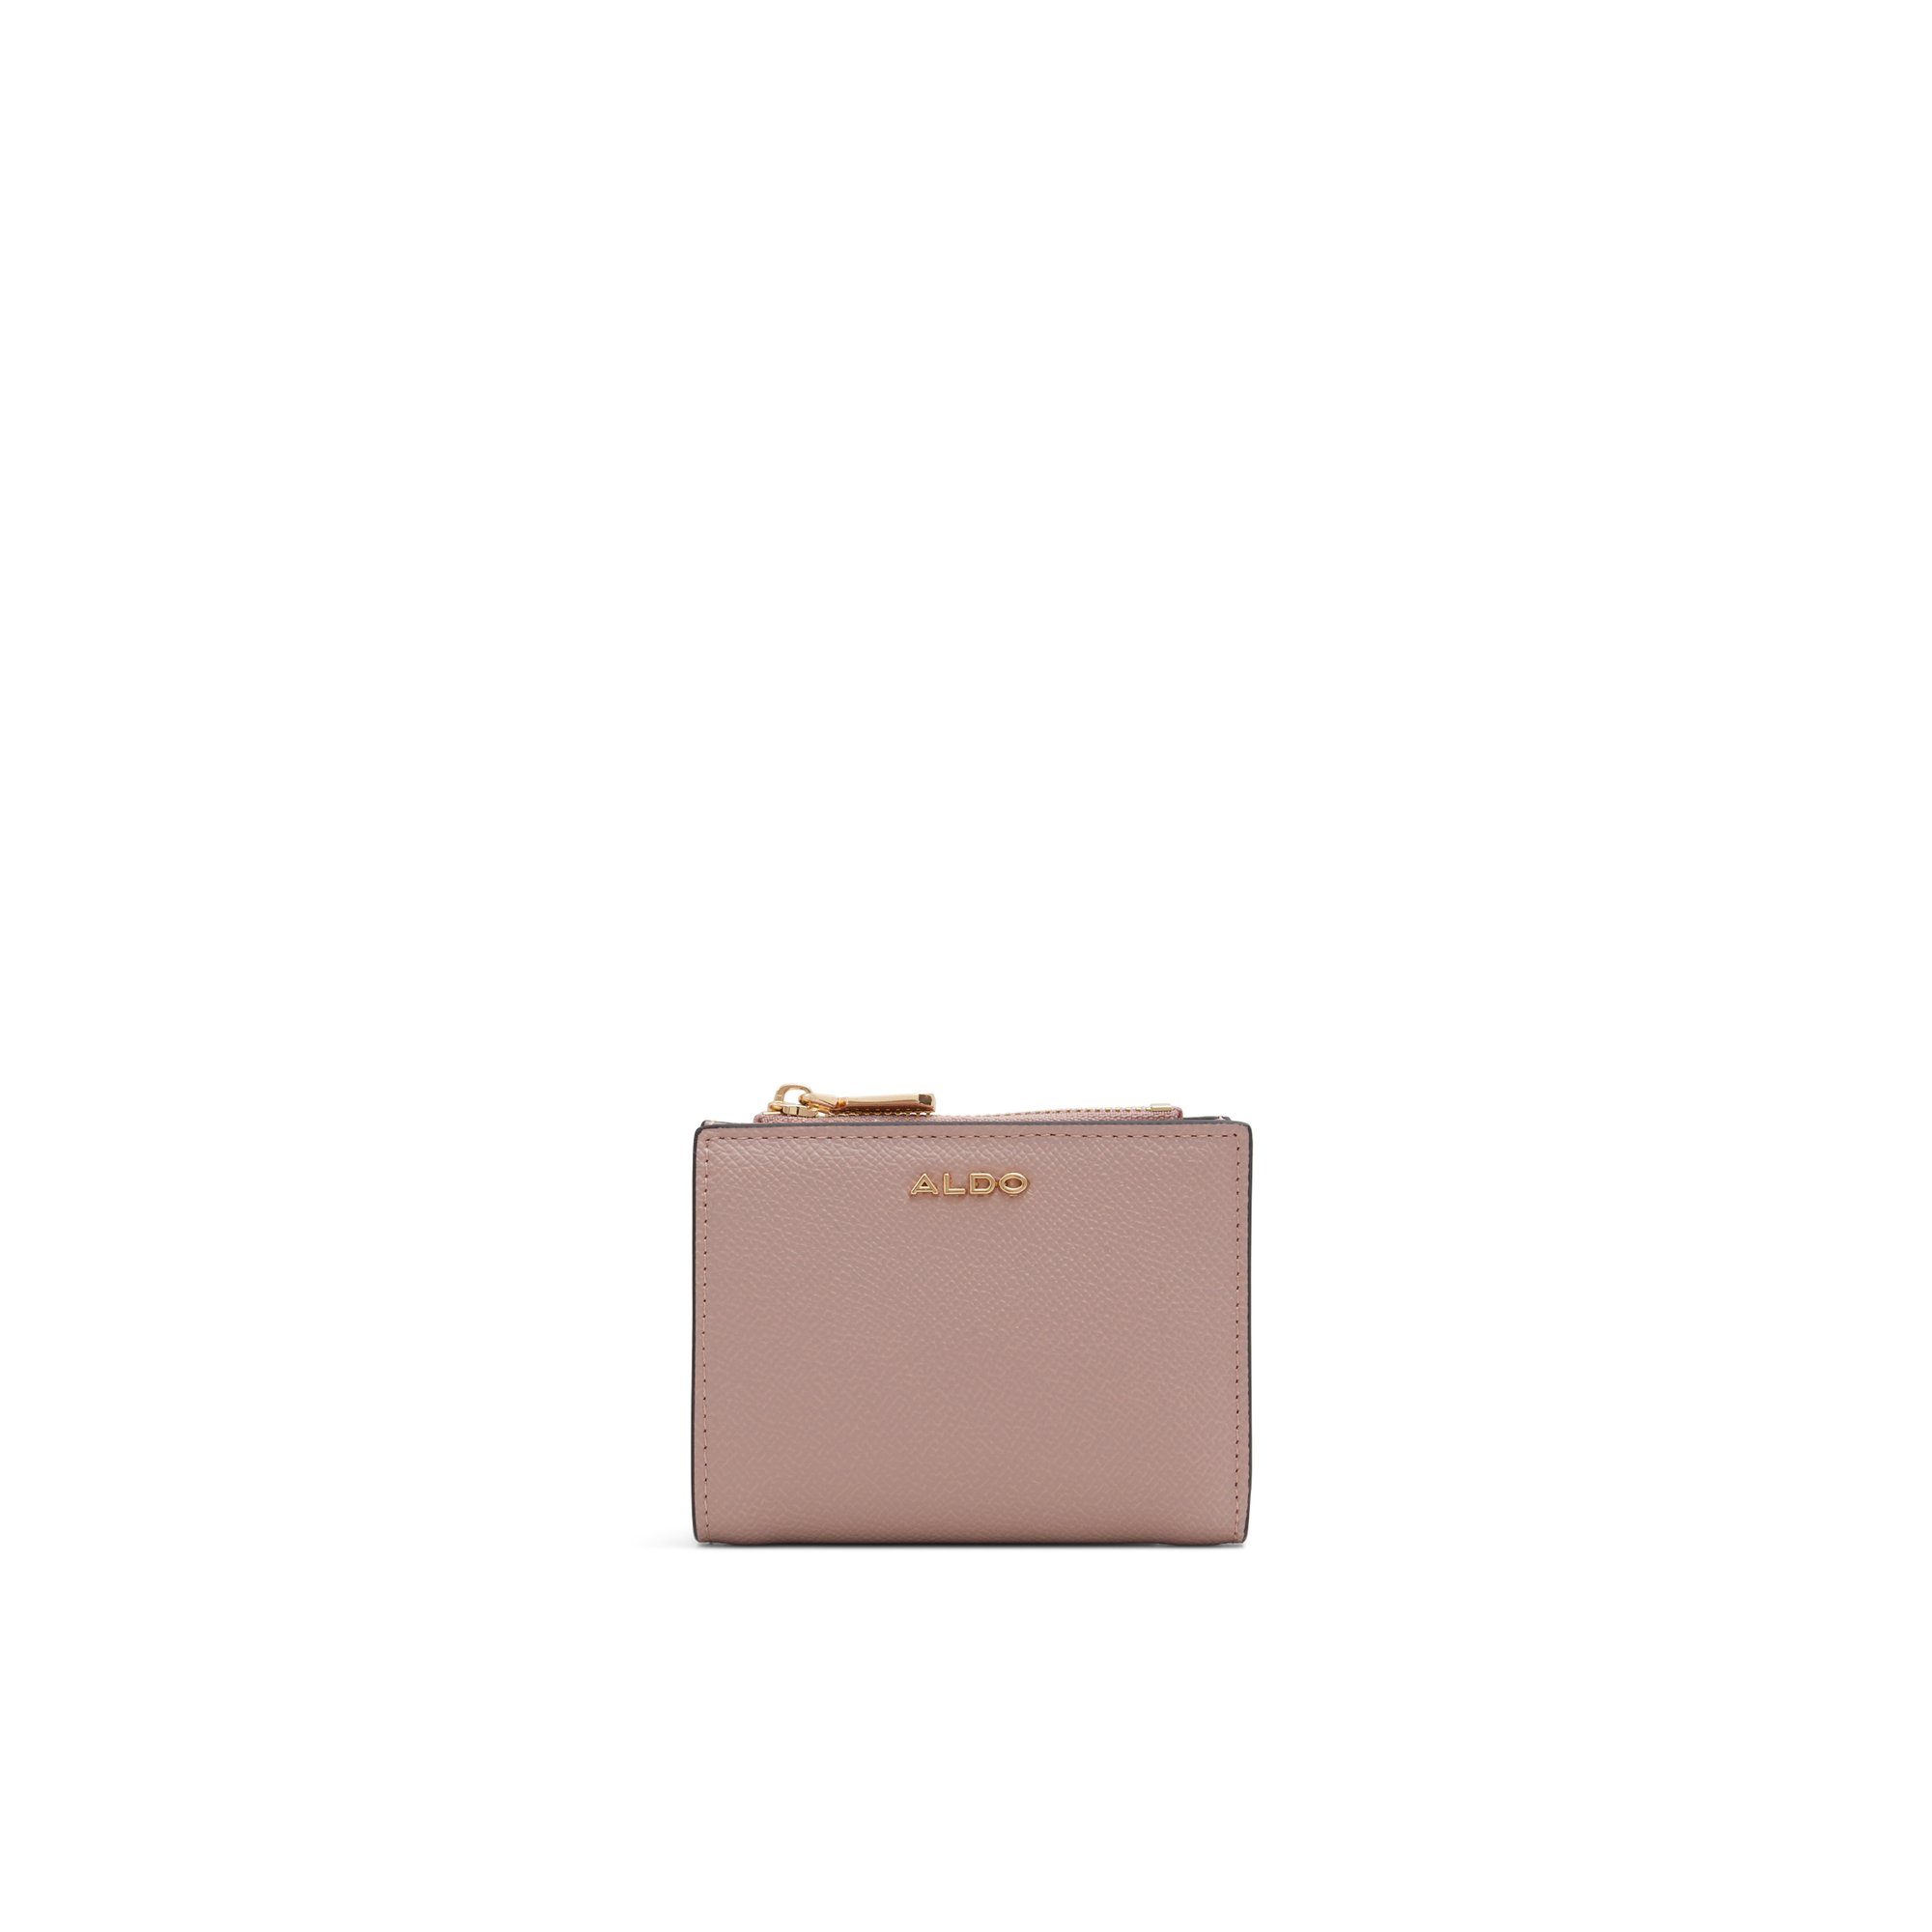 ALDO Vervene - Women's Handbags Wallets - Pink